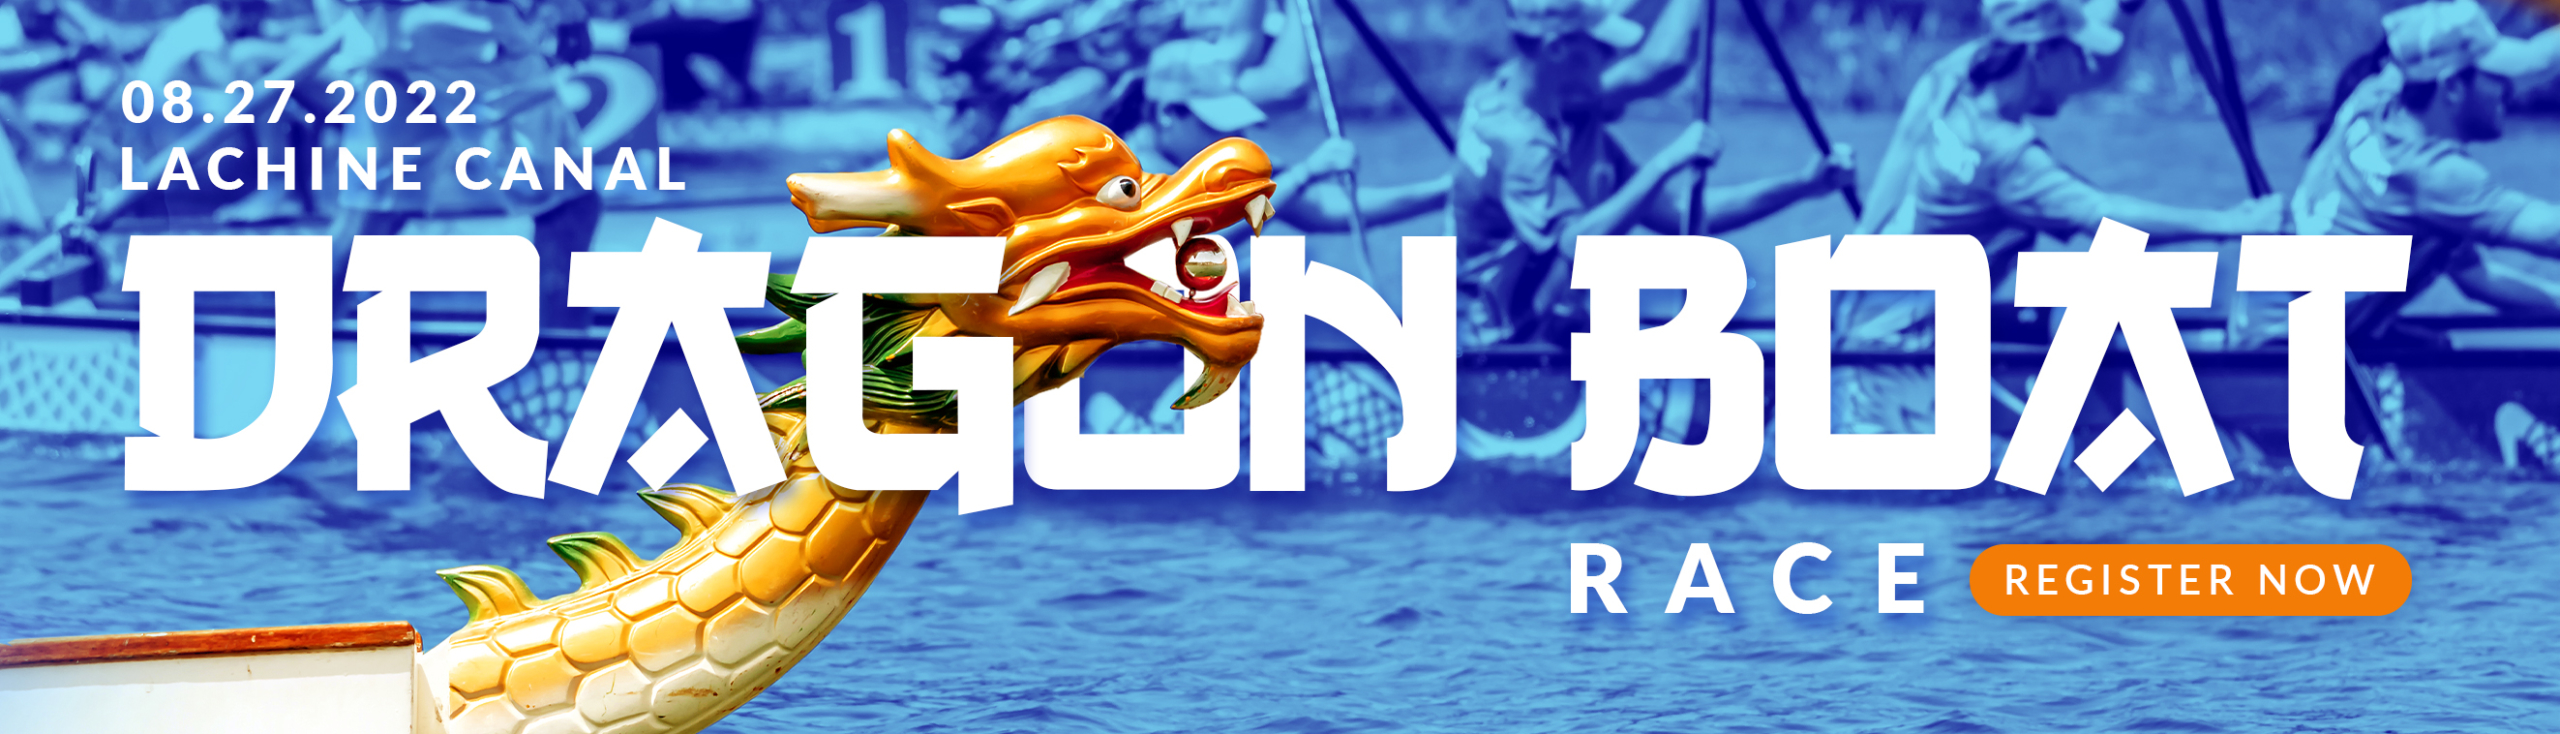 2022 Dragon Boat web banner EN